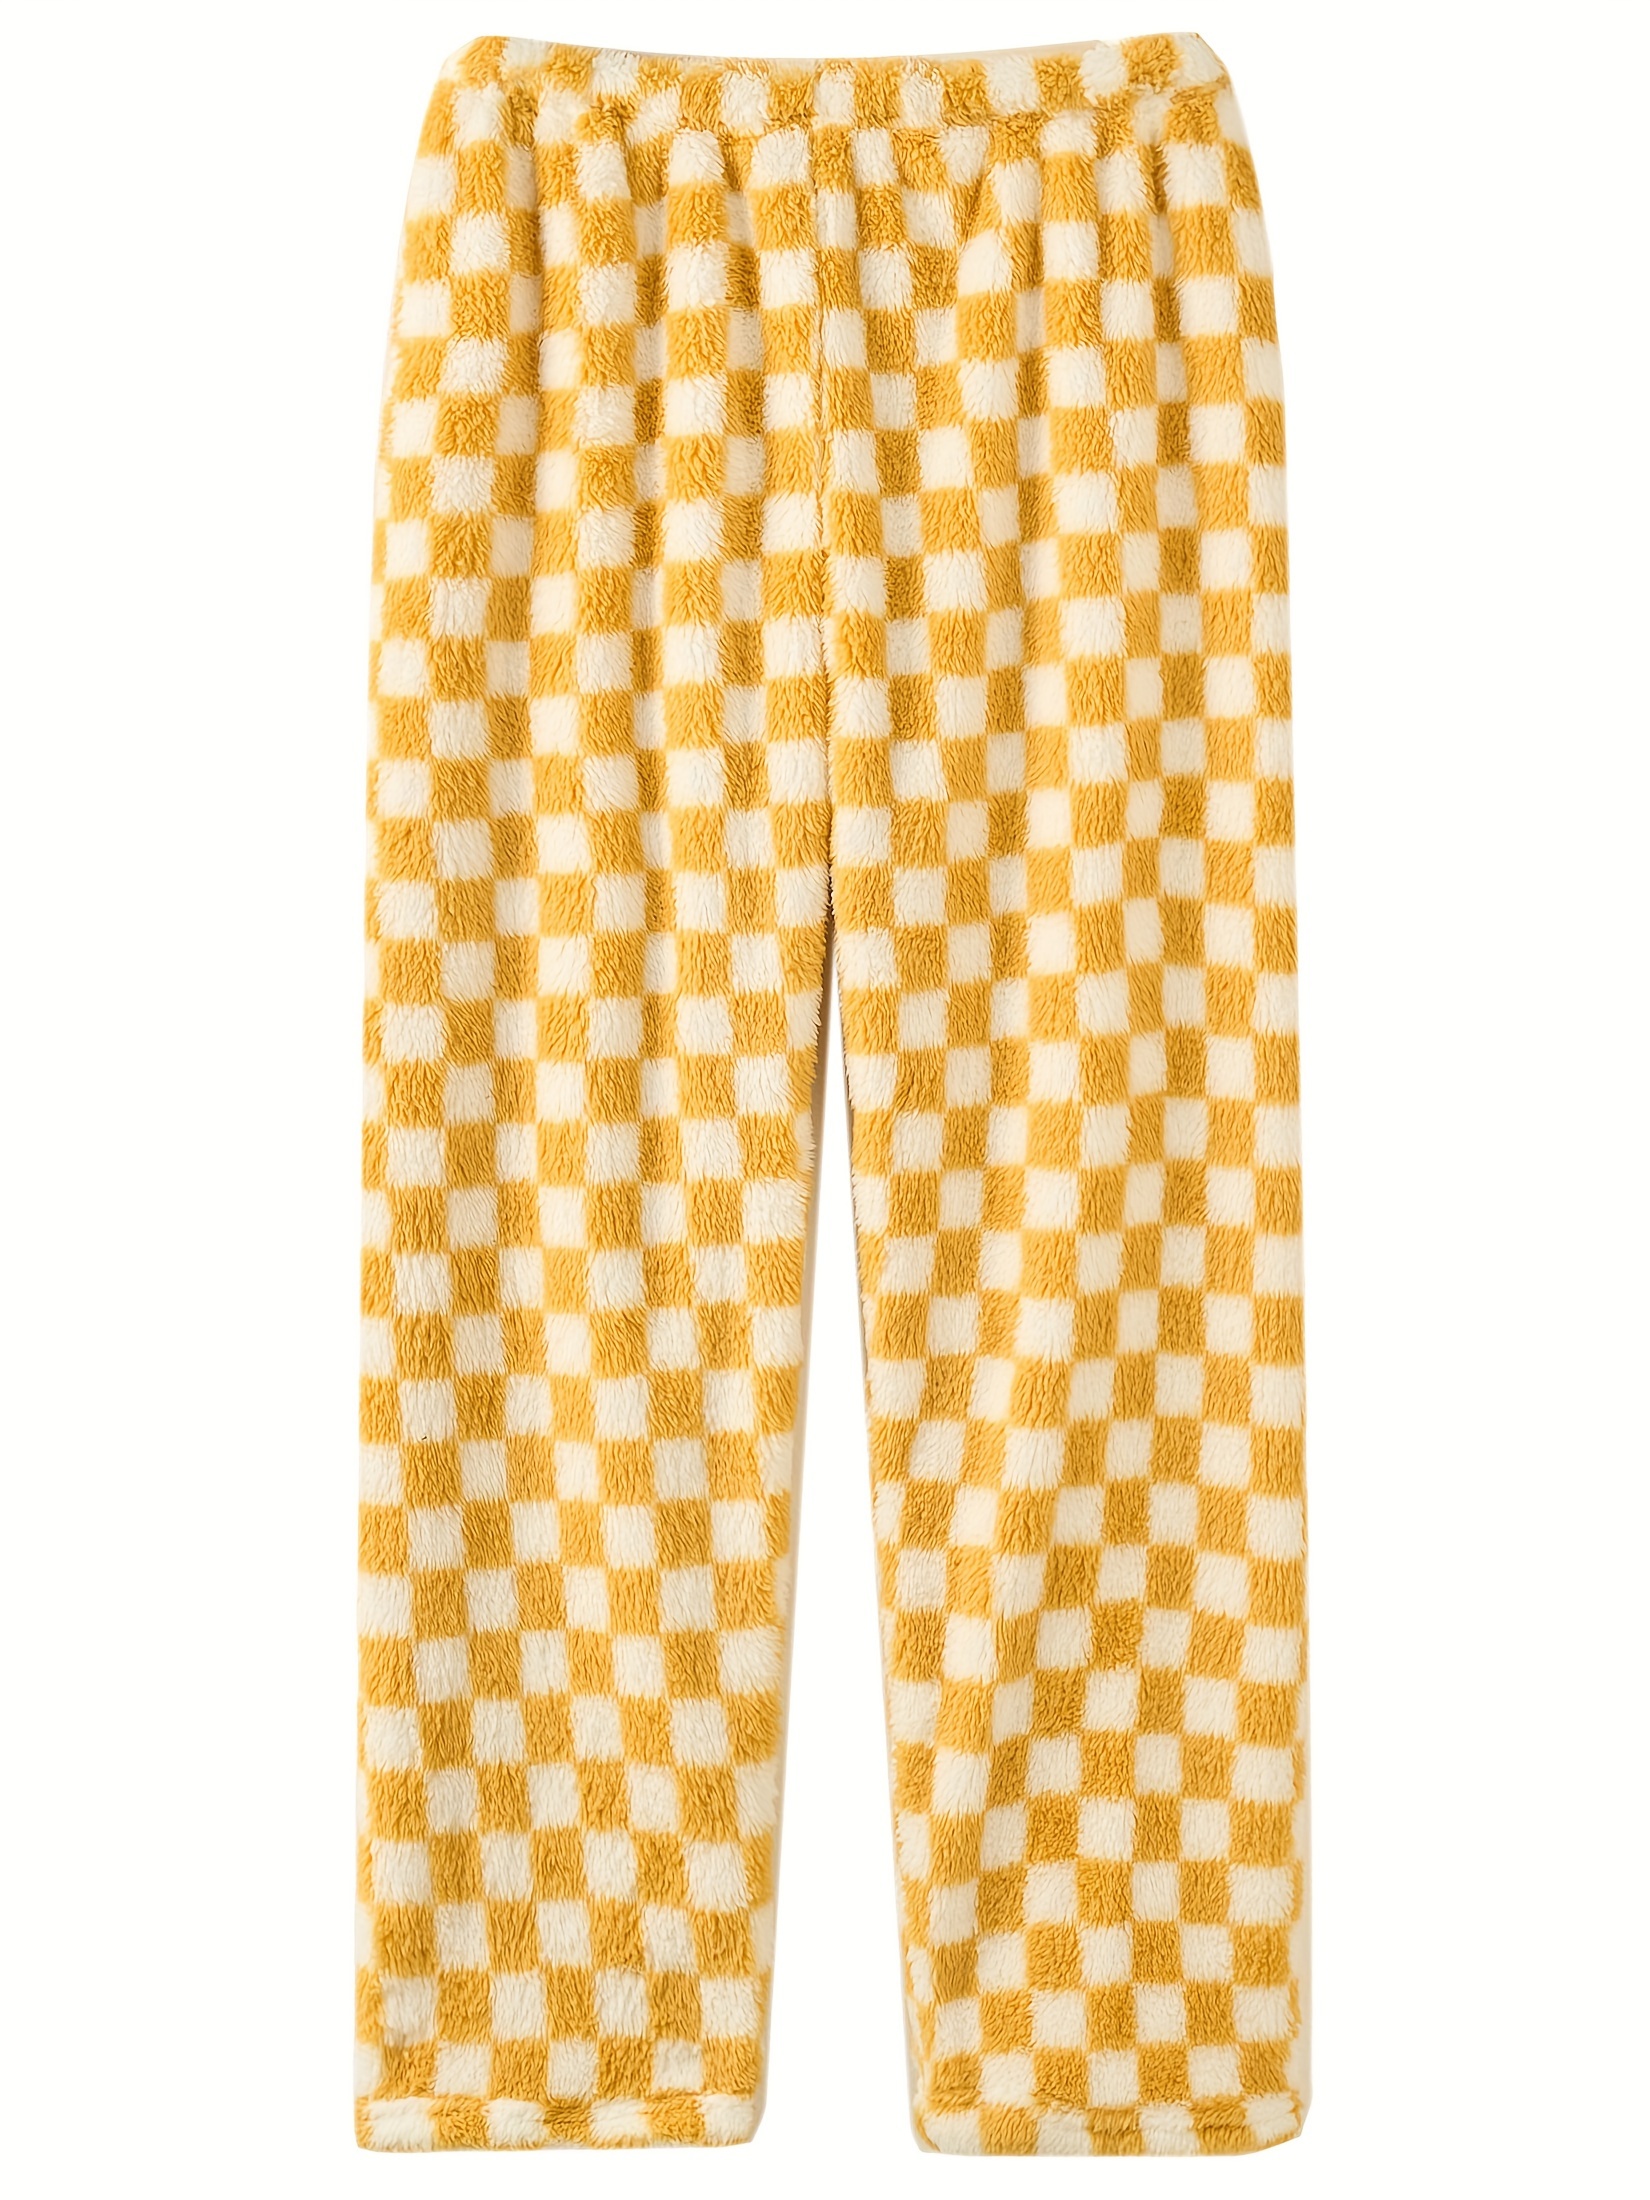 Jo & Bette Women's Fleece Pajama Pants, XS - 3XL / Women Pajama Sets,S -  2XL, petite, regular or plus size PJs Pants/Set in 2023